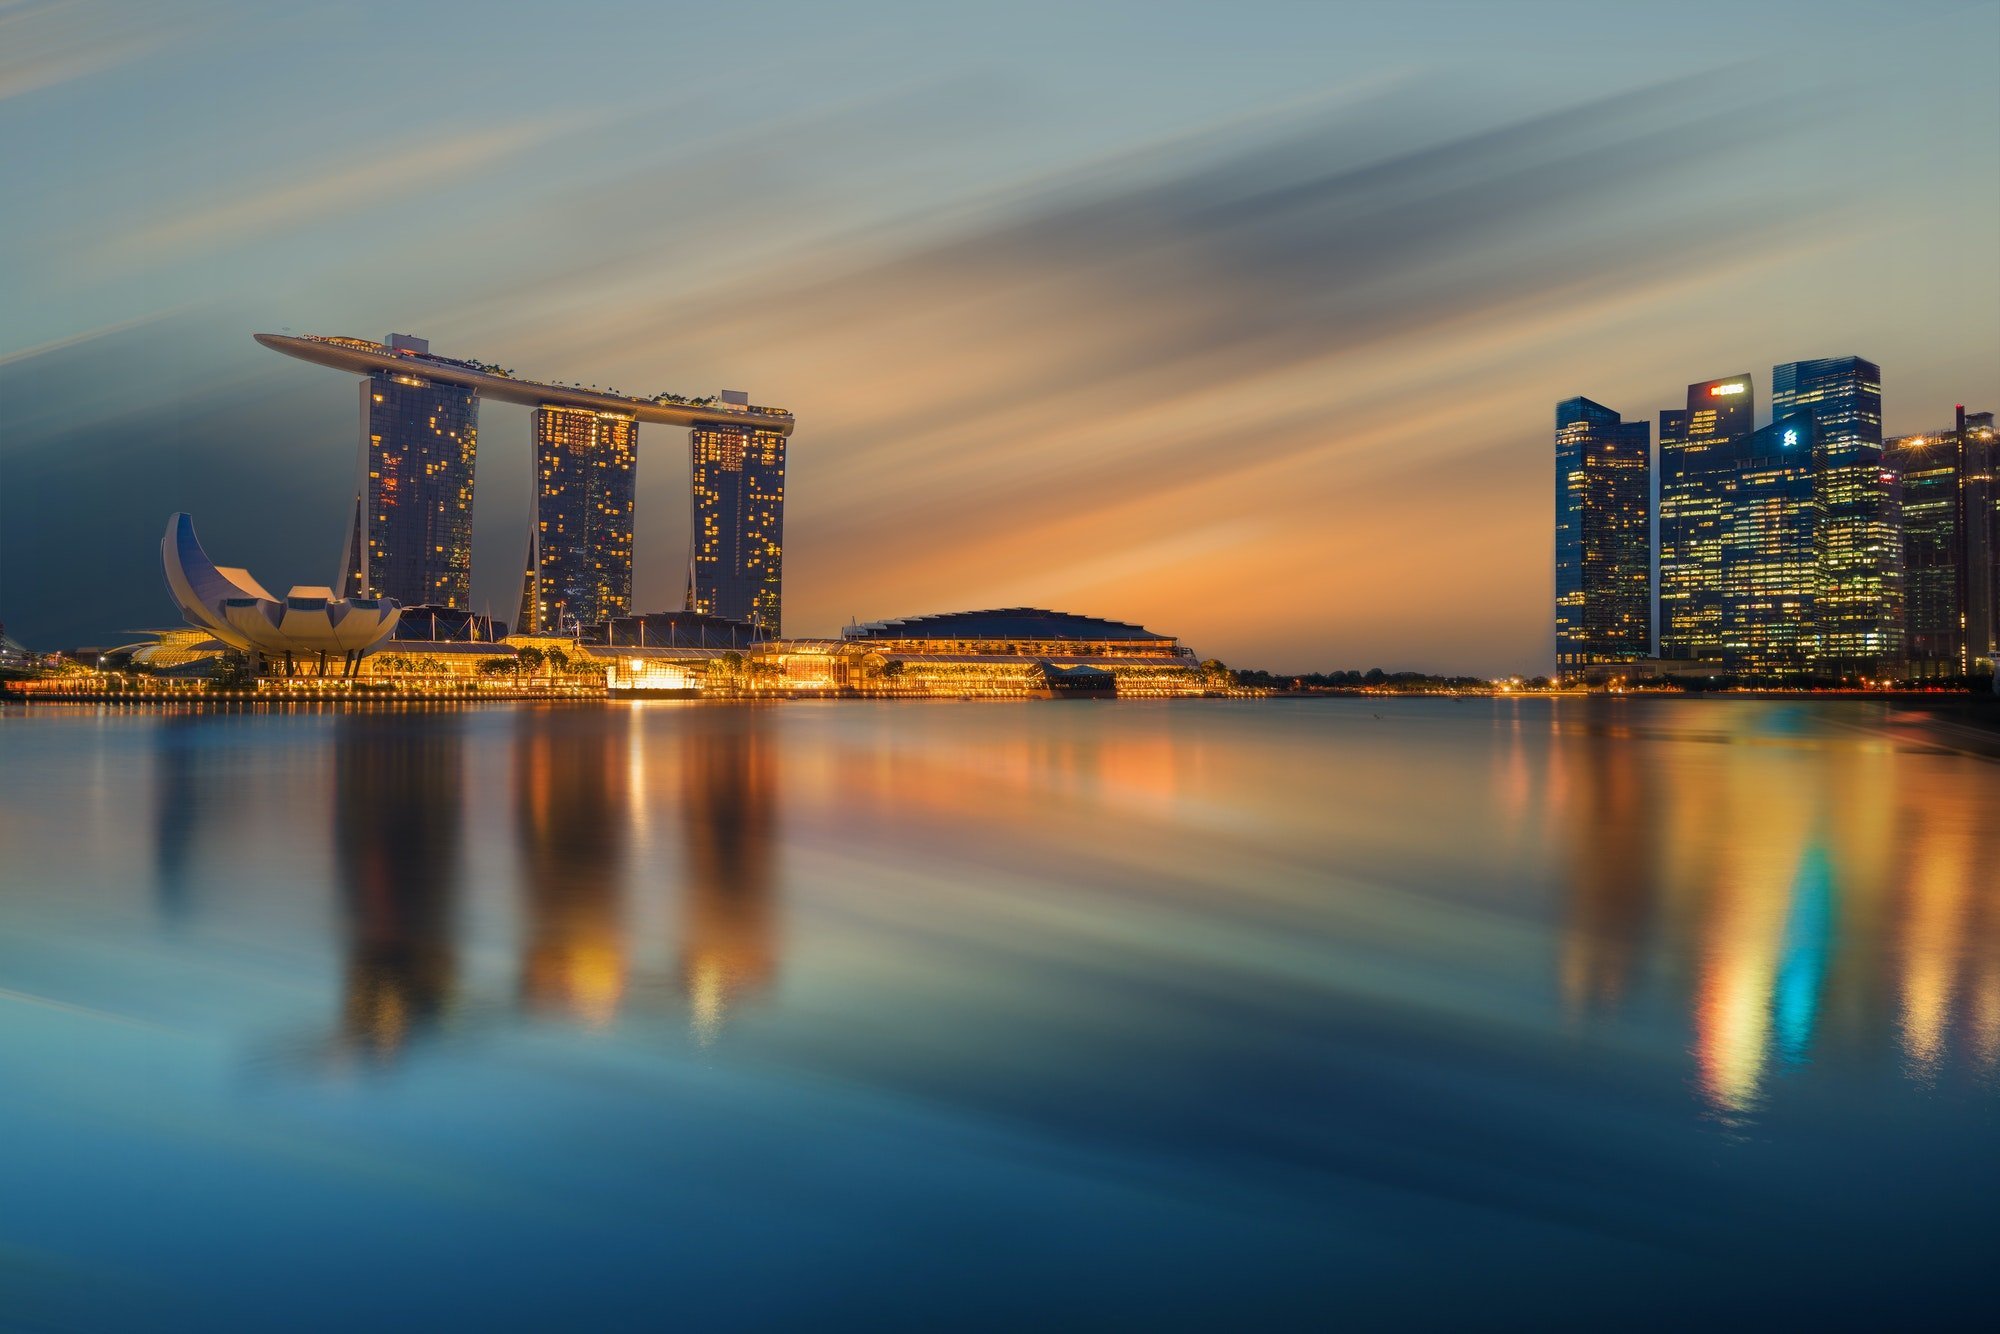 Singapore View Of Marina Bay sands.